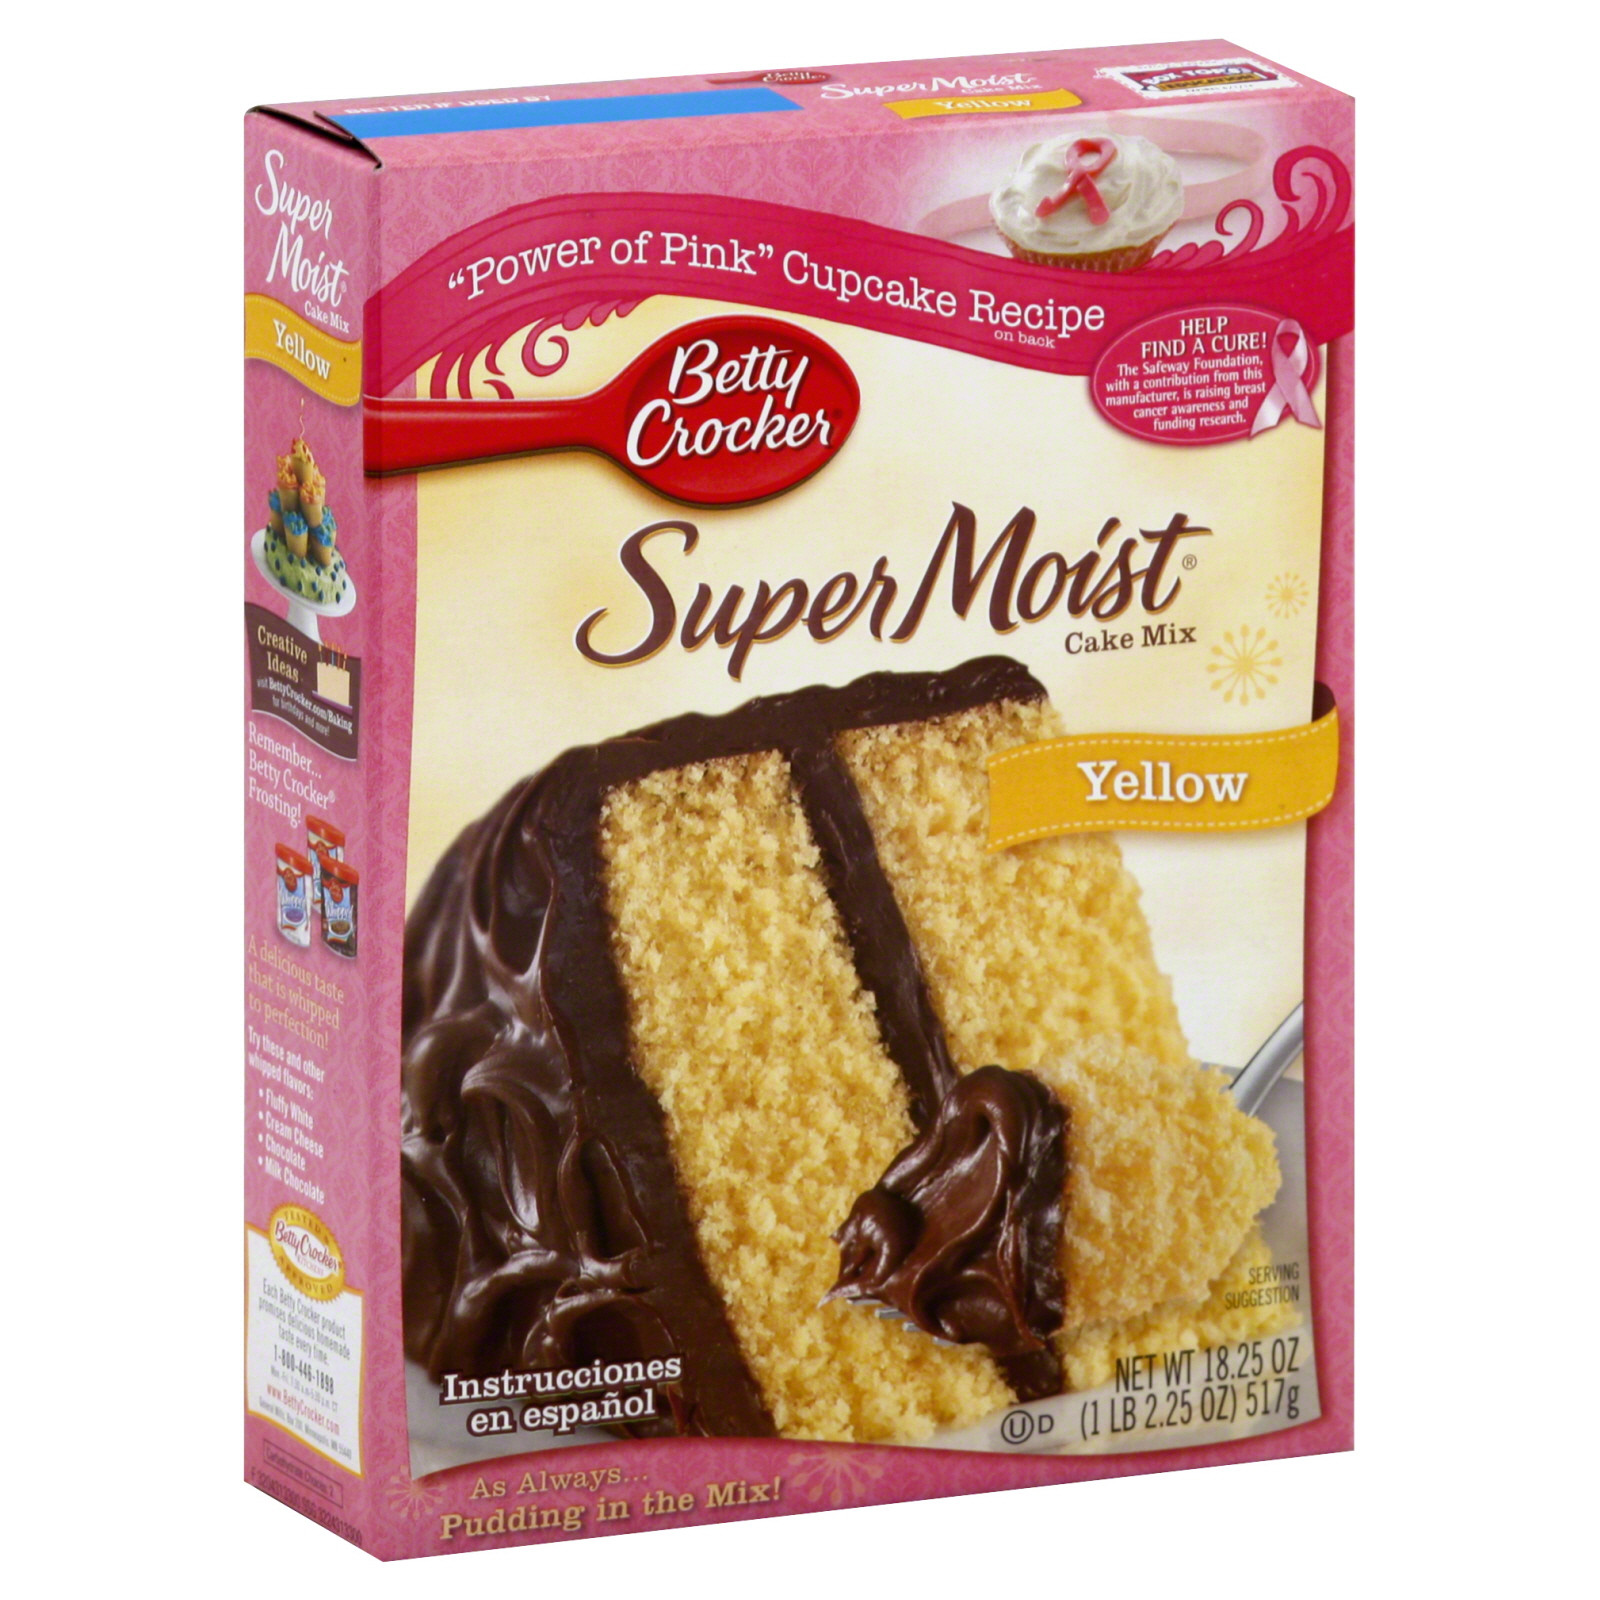 Betty Crocker Yellow Cake Mix
 Betty Crocker Super Moist Cake Mix Yellow 18 25 oz 1 lb